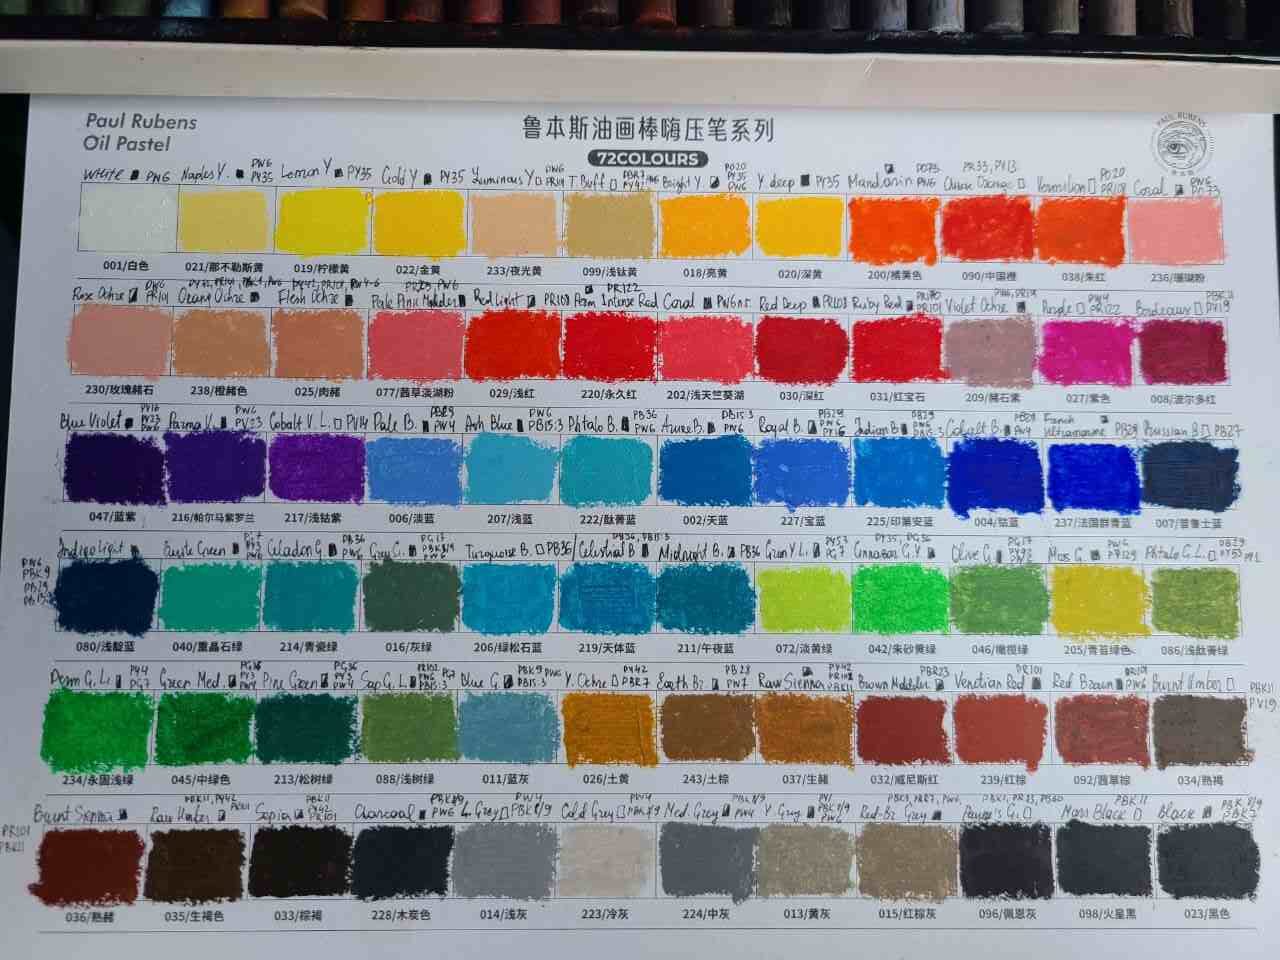 Paul Rubens Oil Pastels Review color chart